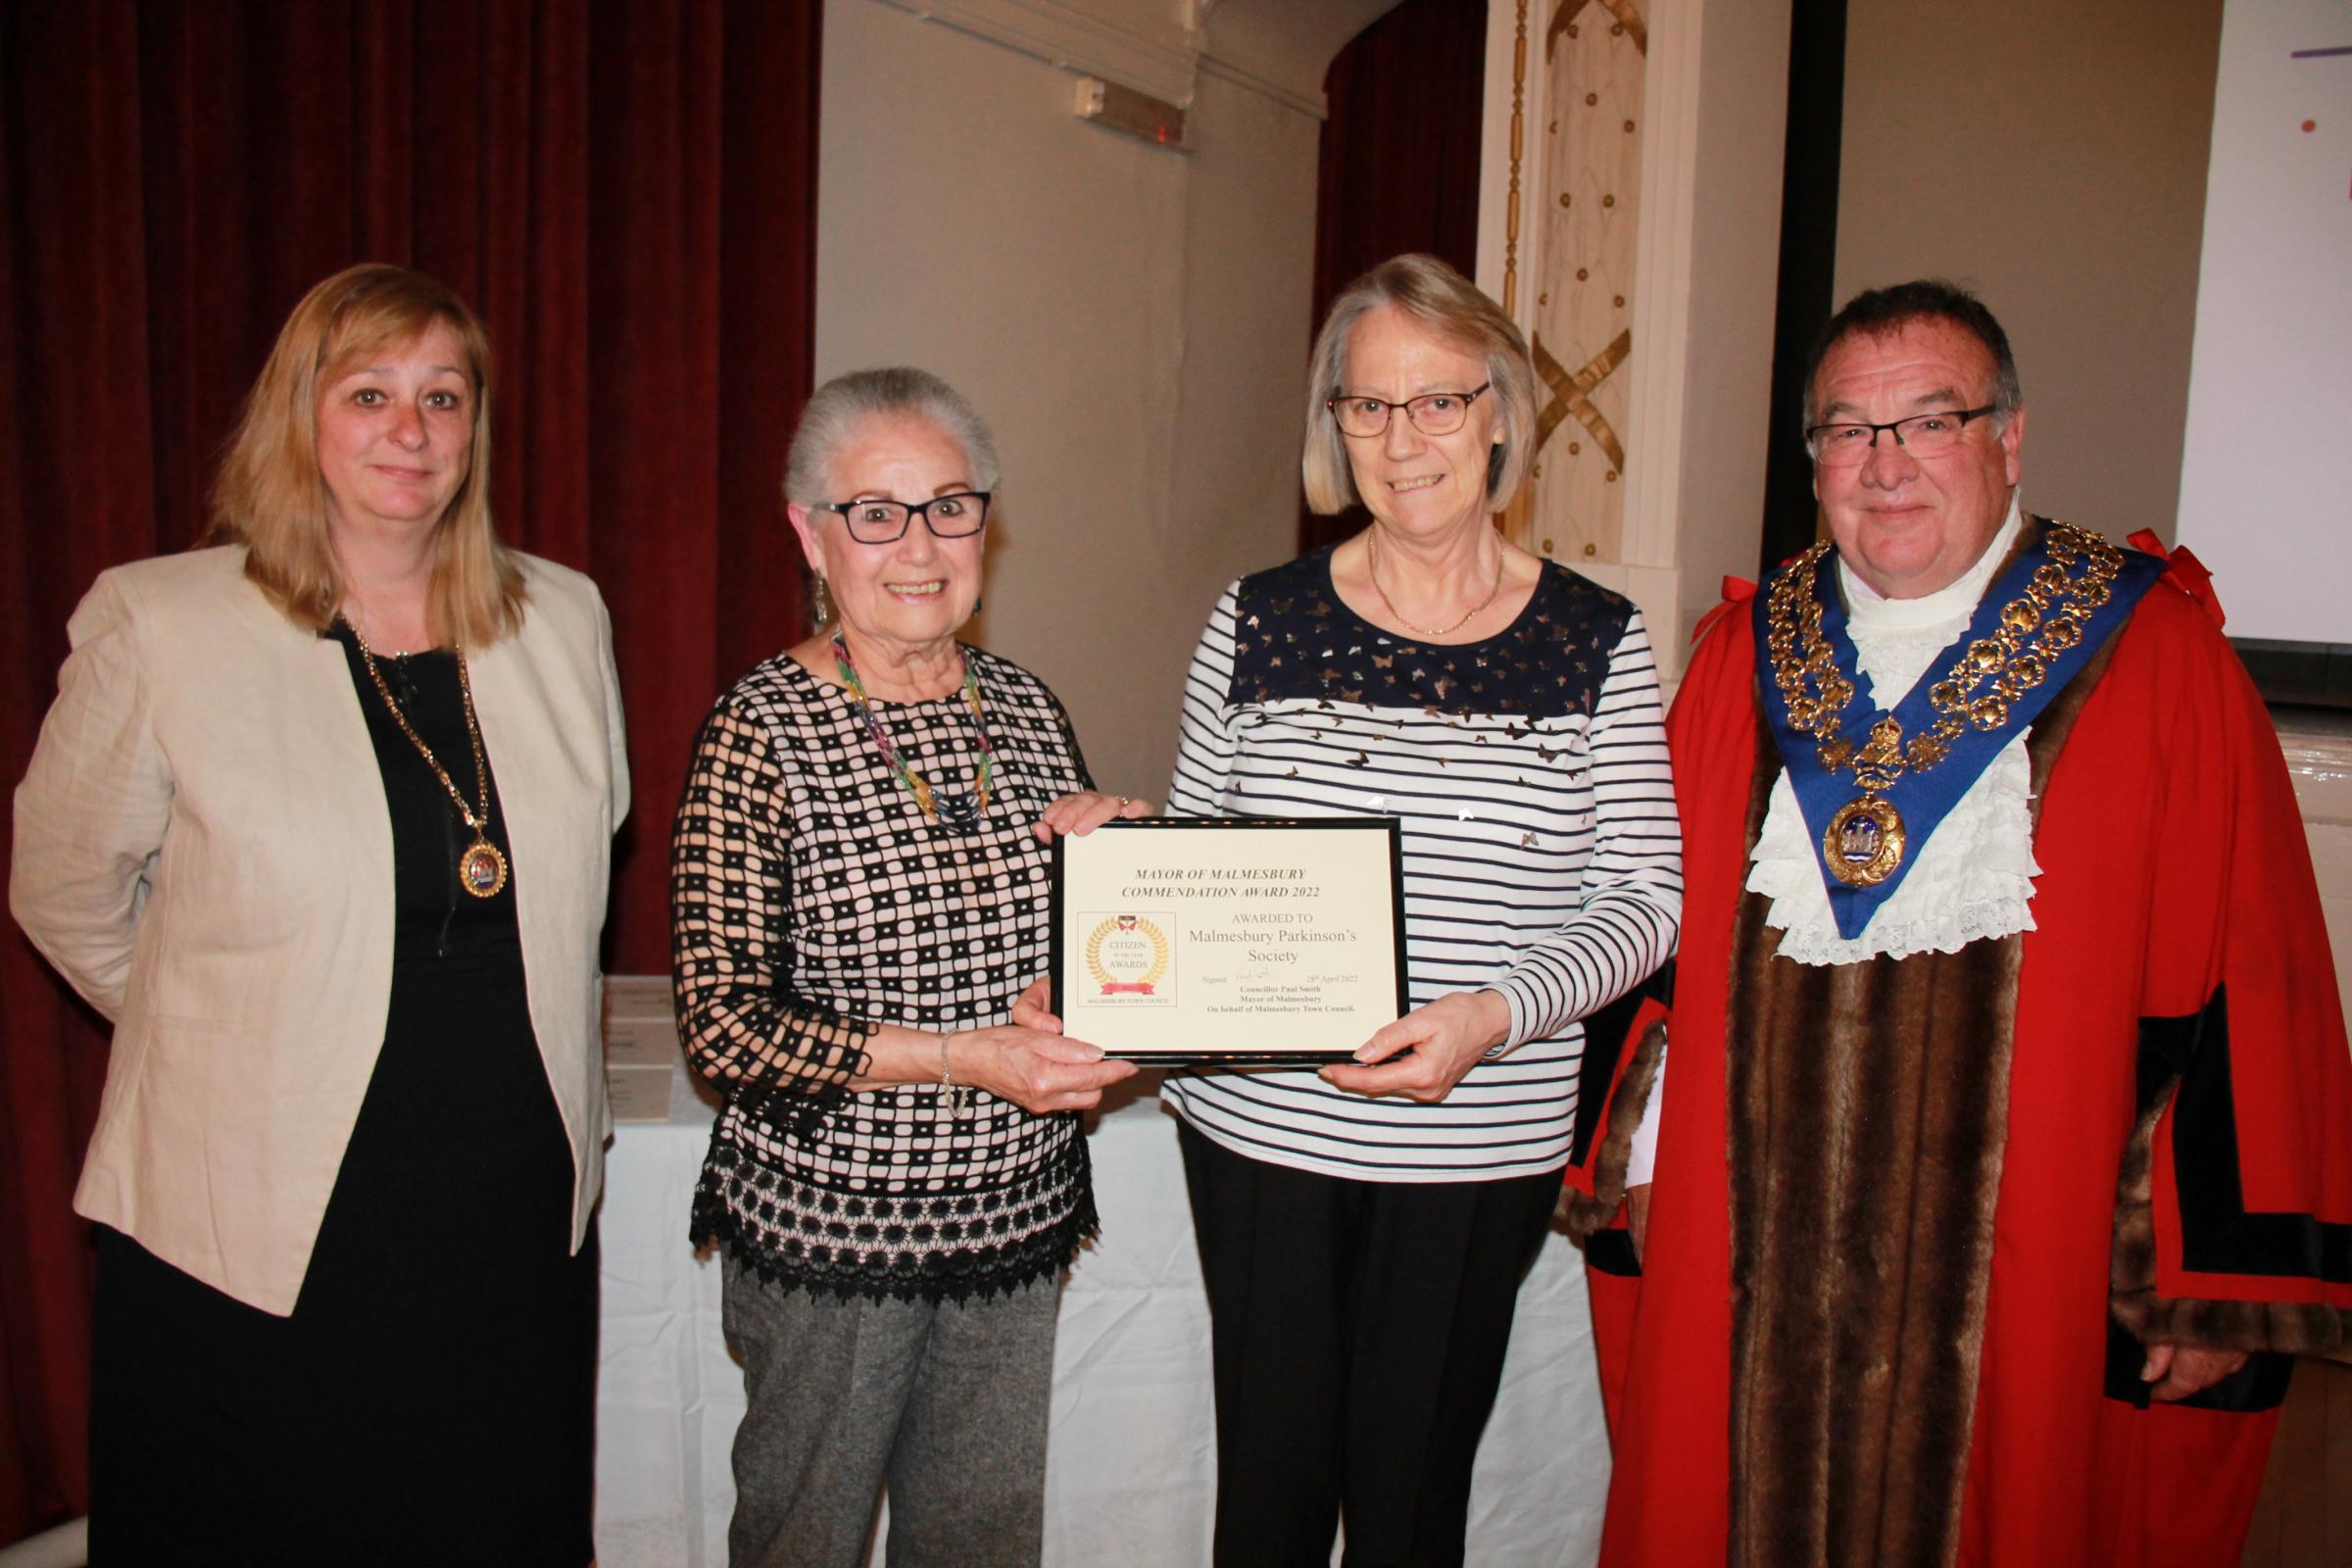 Malmesbury Parkinson’s Society were given a Commendation Award 